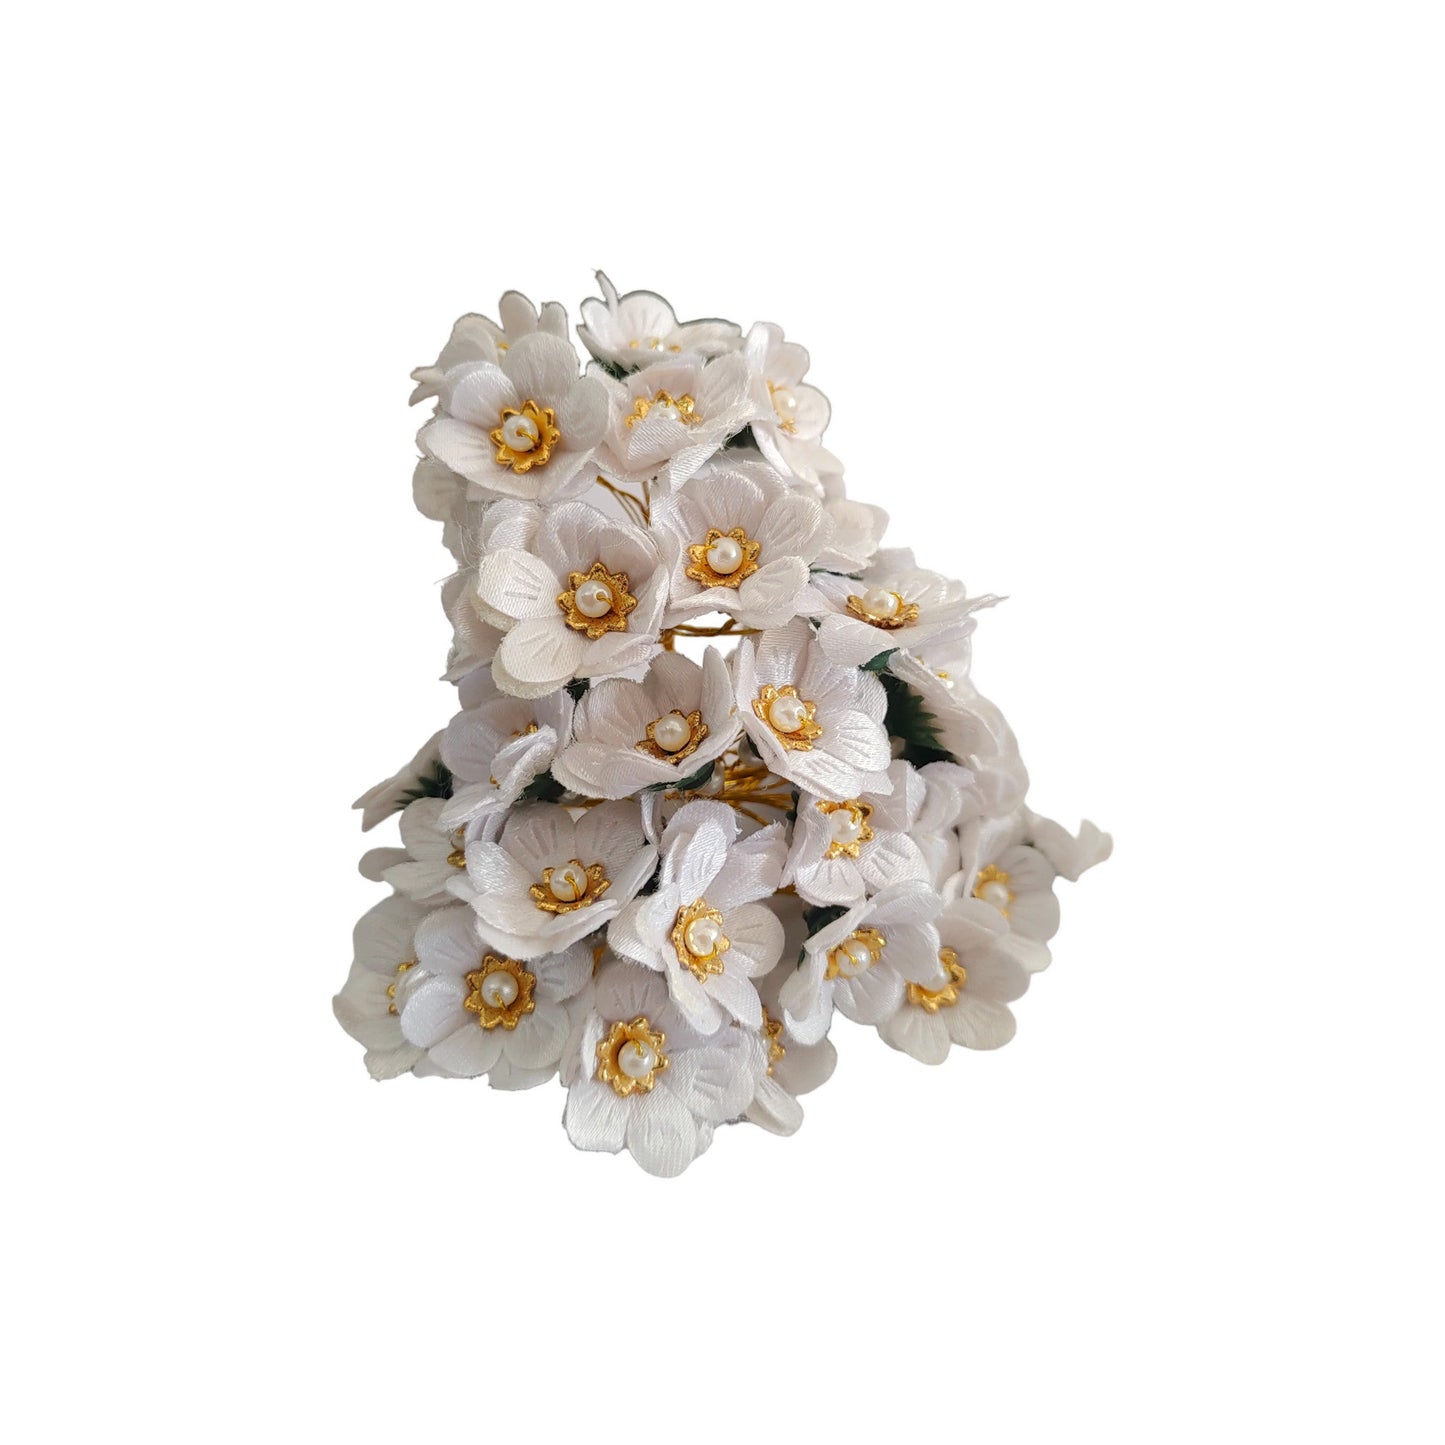 Decorative Artificial Primrose Fabric Flower for Decor, Craft or Textile, 60Pcs -11134, White